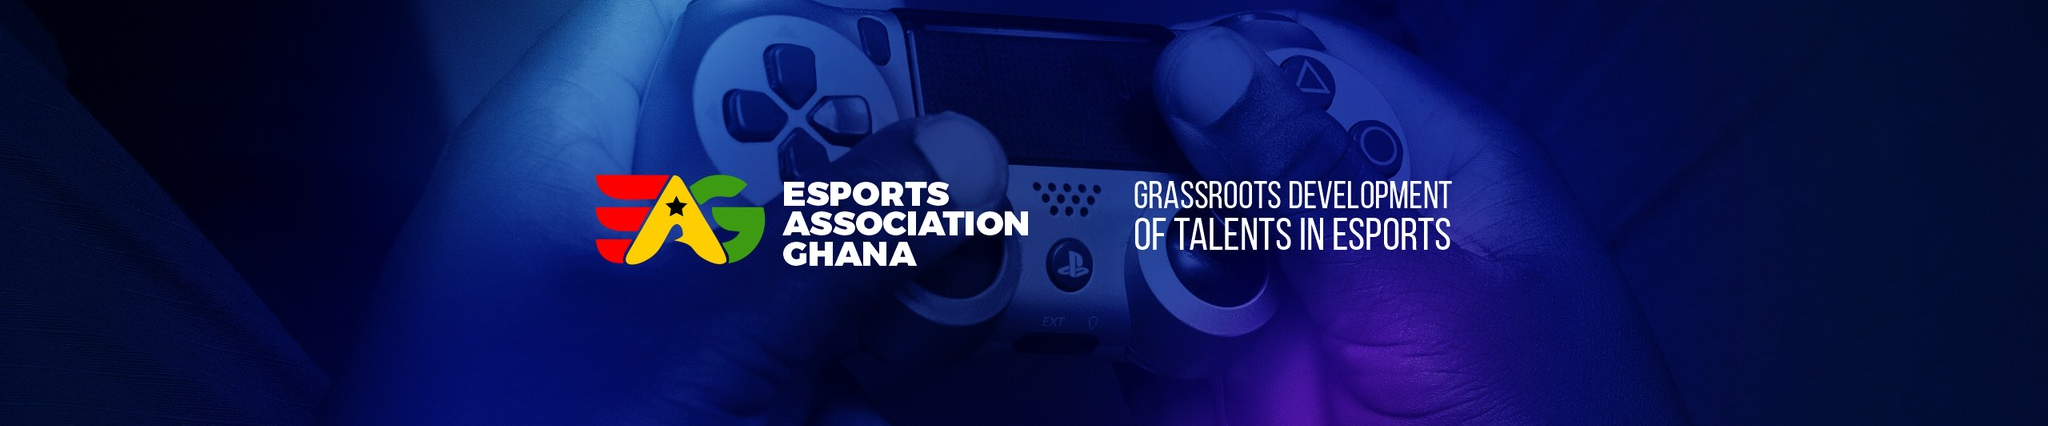 Esports Association Ghana